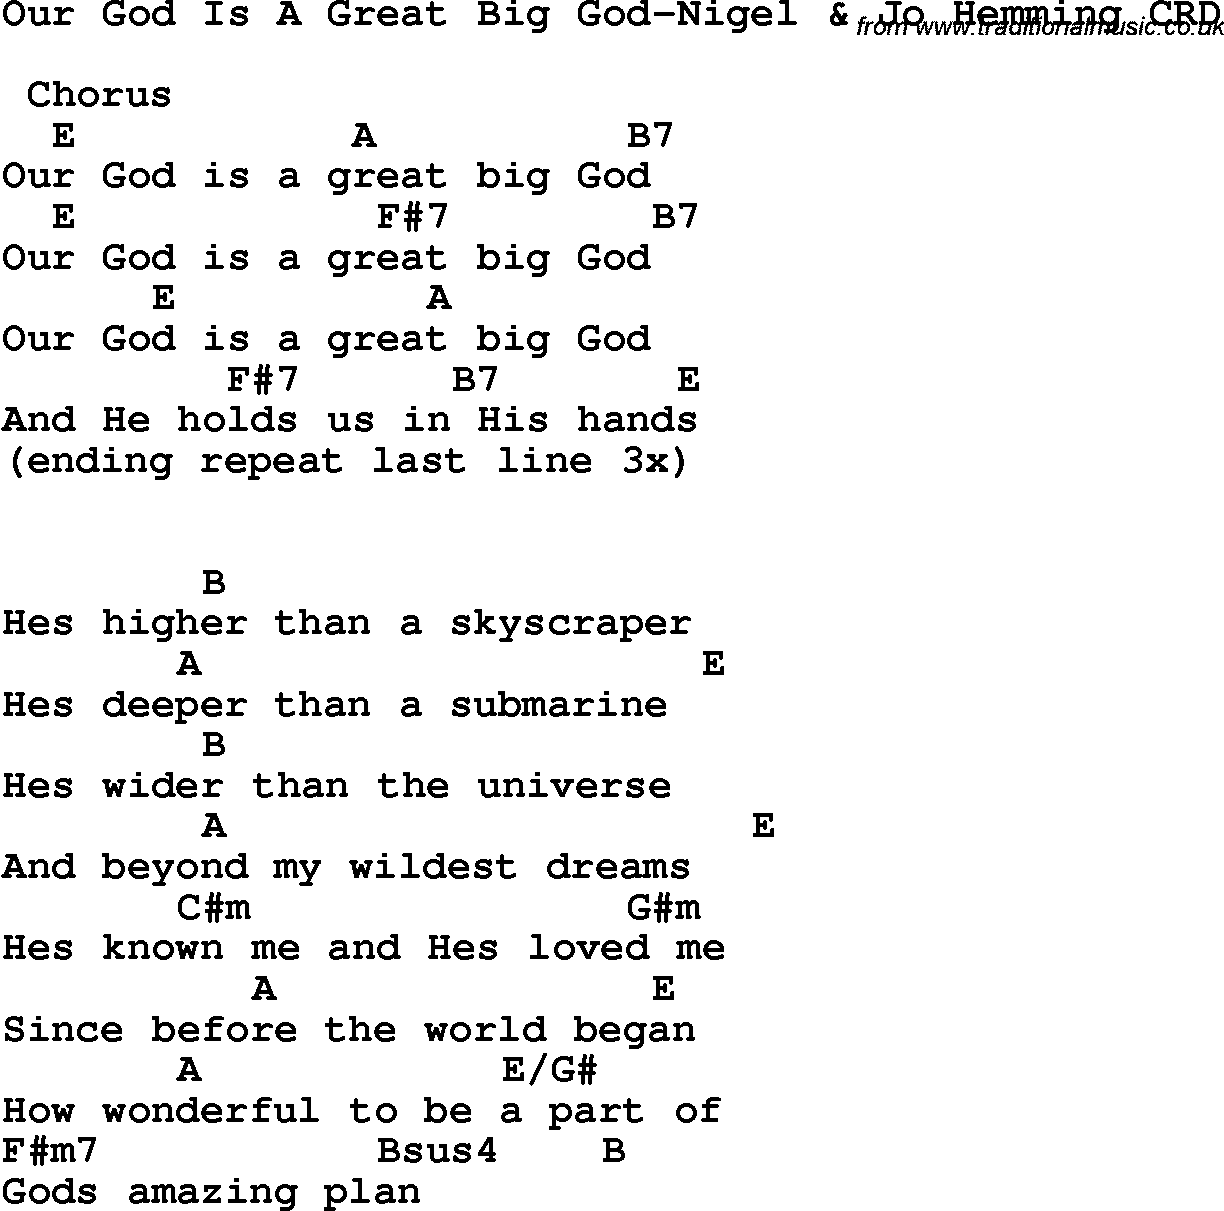 Christian Chlidrens Song Our God Is A Great Big God-Nigel  Jo Hemming CRD Lyrics & Chords